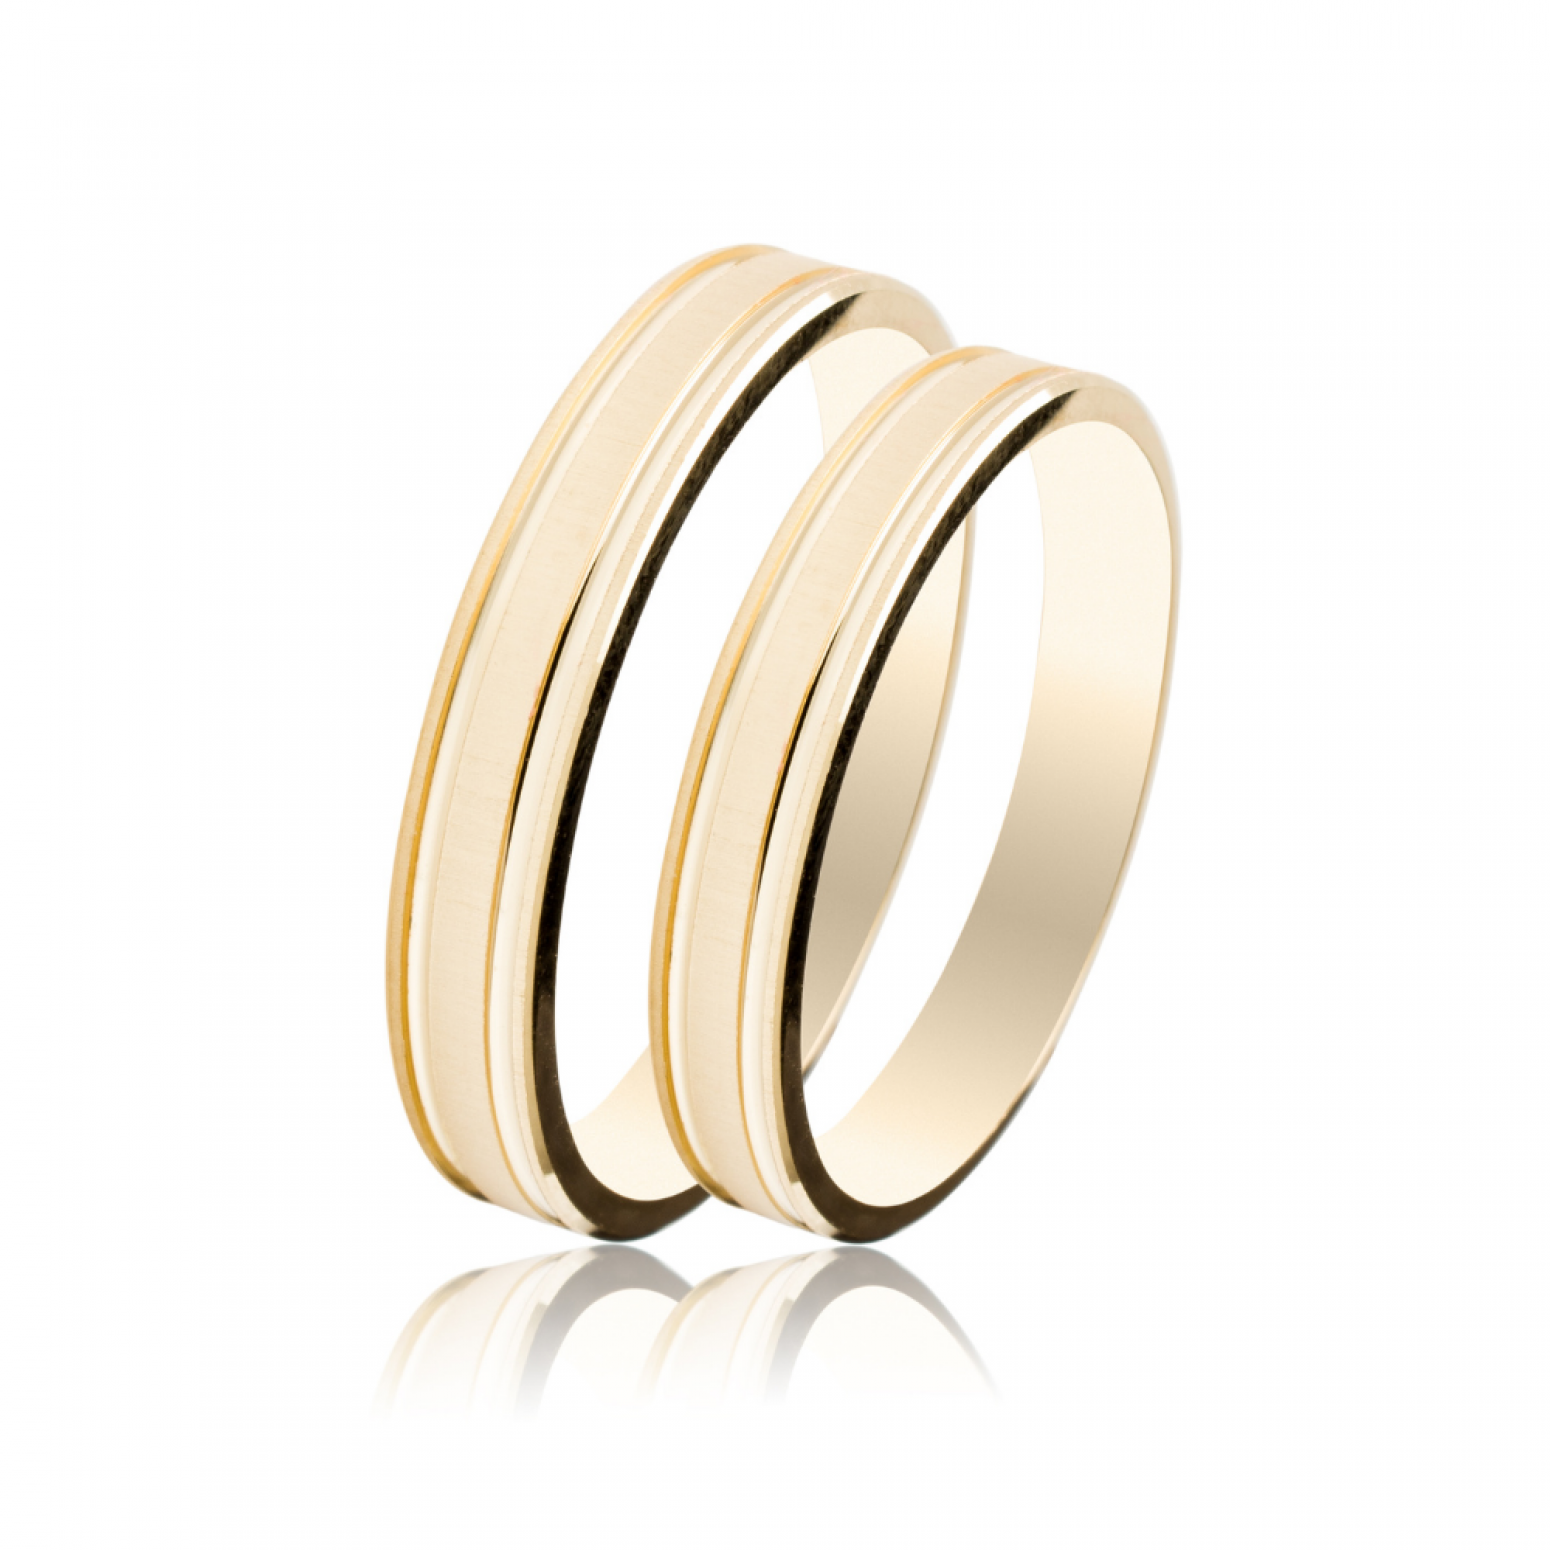 Maschio Femmina wedding rings in gold, K9, pair da4041 WEDDING RINGS Κοσμηματα - chrilia.gr